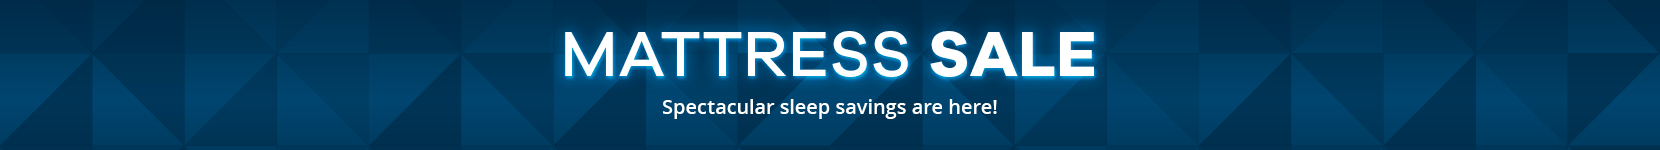 mattress sale. spectacular sleep savings are here!